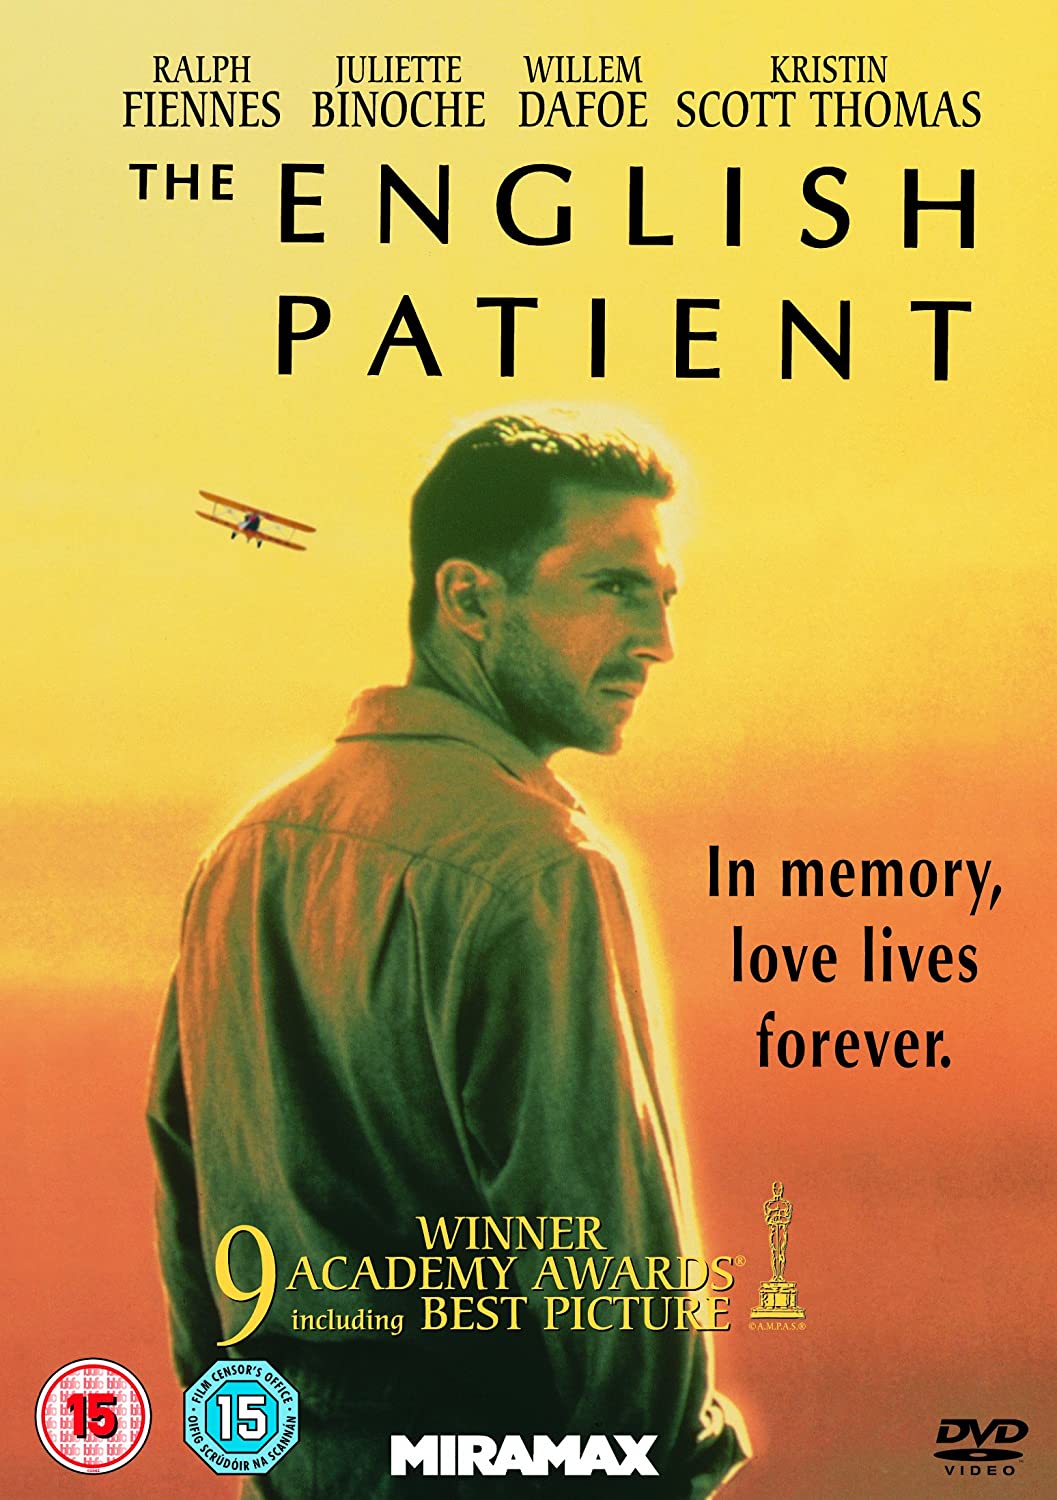 The English Patient - Romance [DVD]